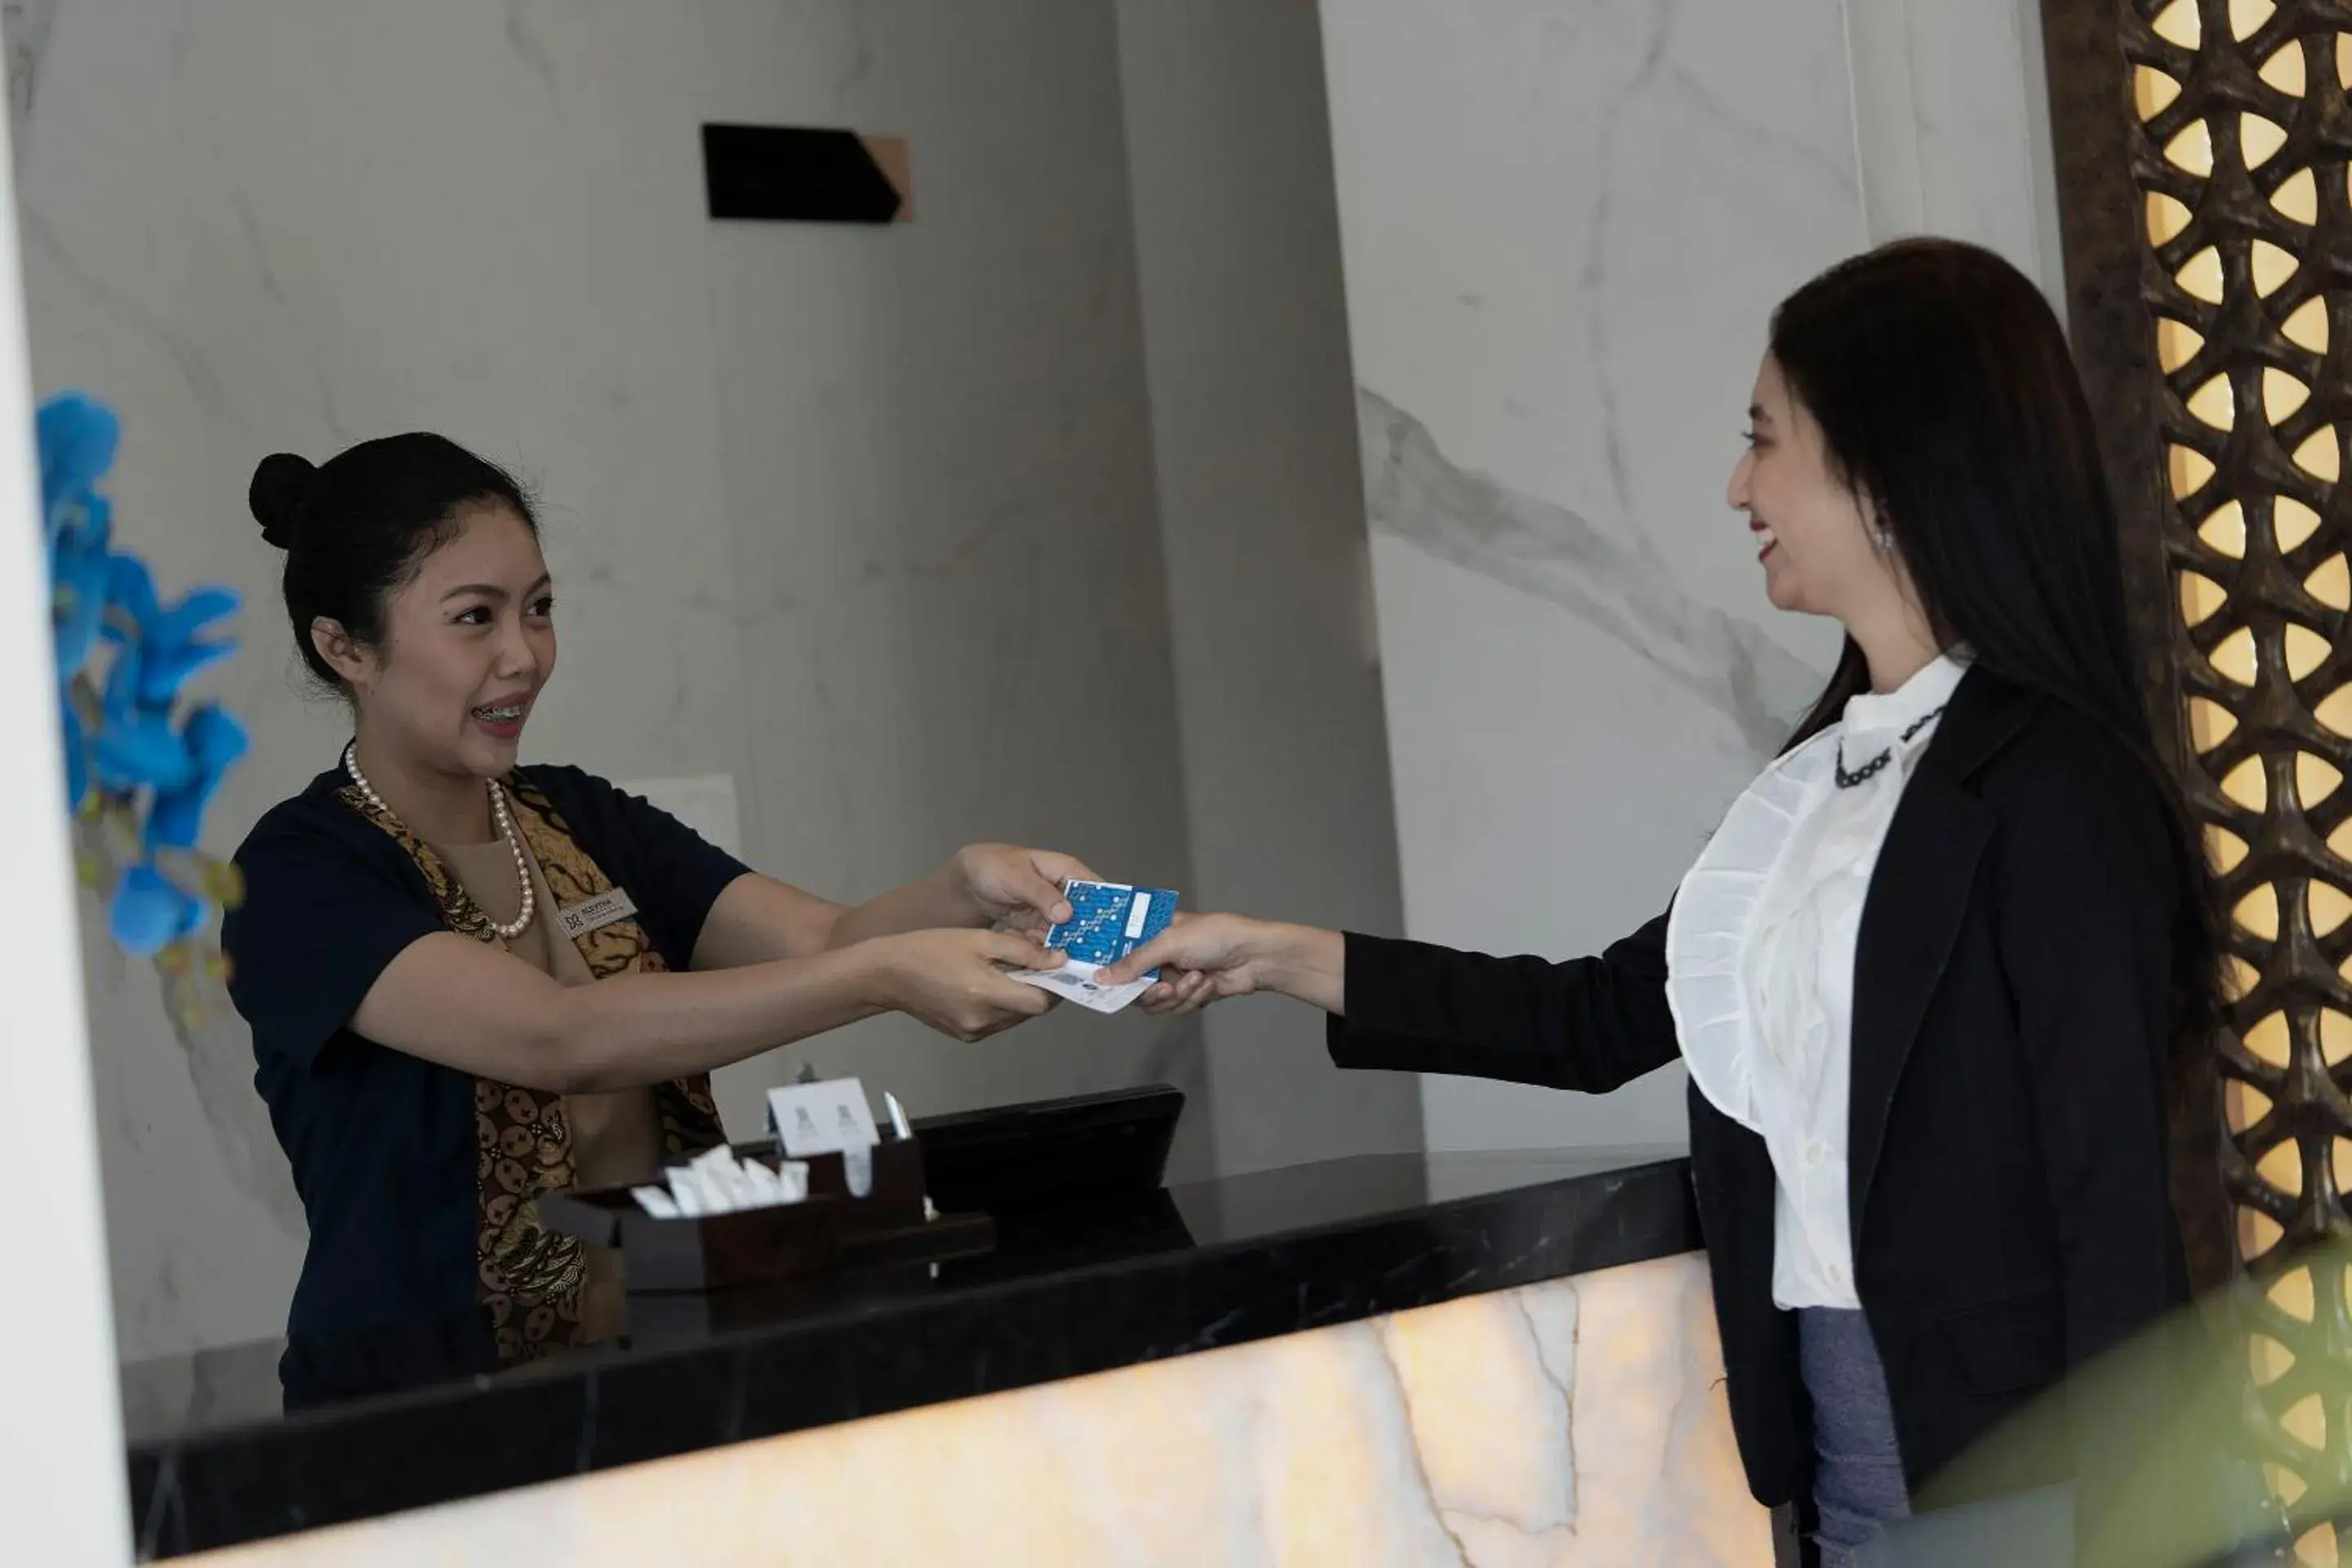 Lobby or reception in BATIQA Hotel Darmo - Surabaya